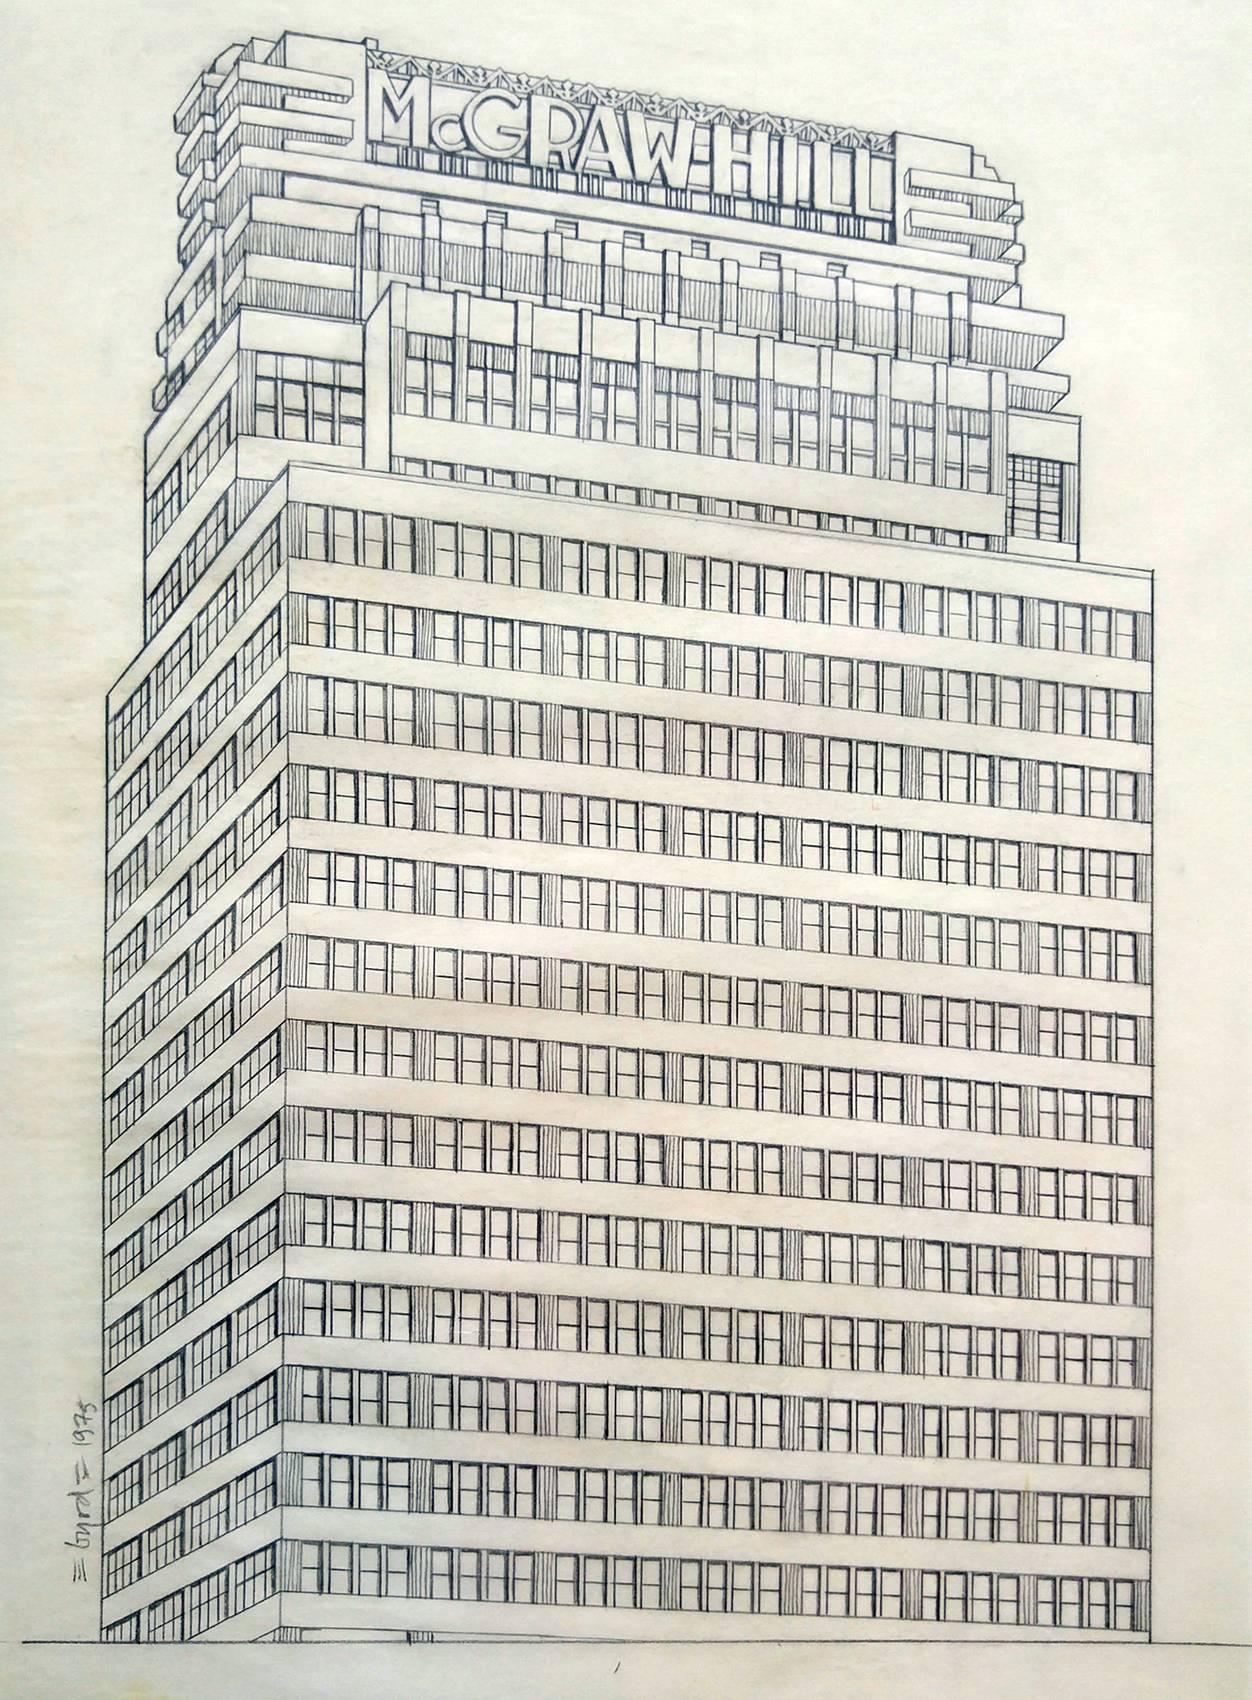 McGraw-Hill Building West 42 Street, Pencil on Vellum, - Art by David Edward Byrd 